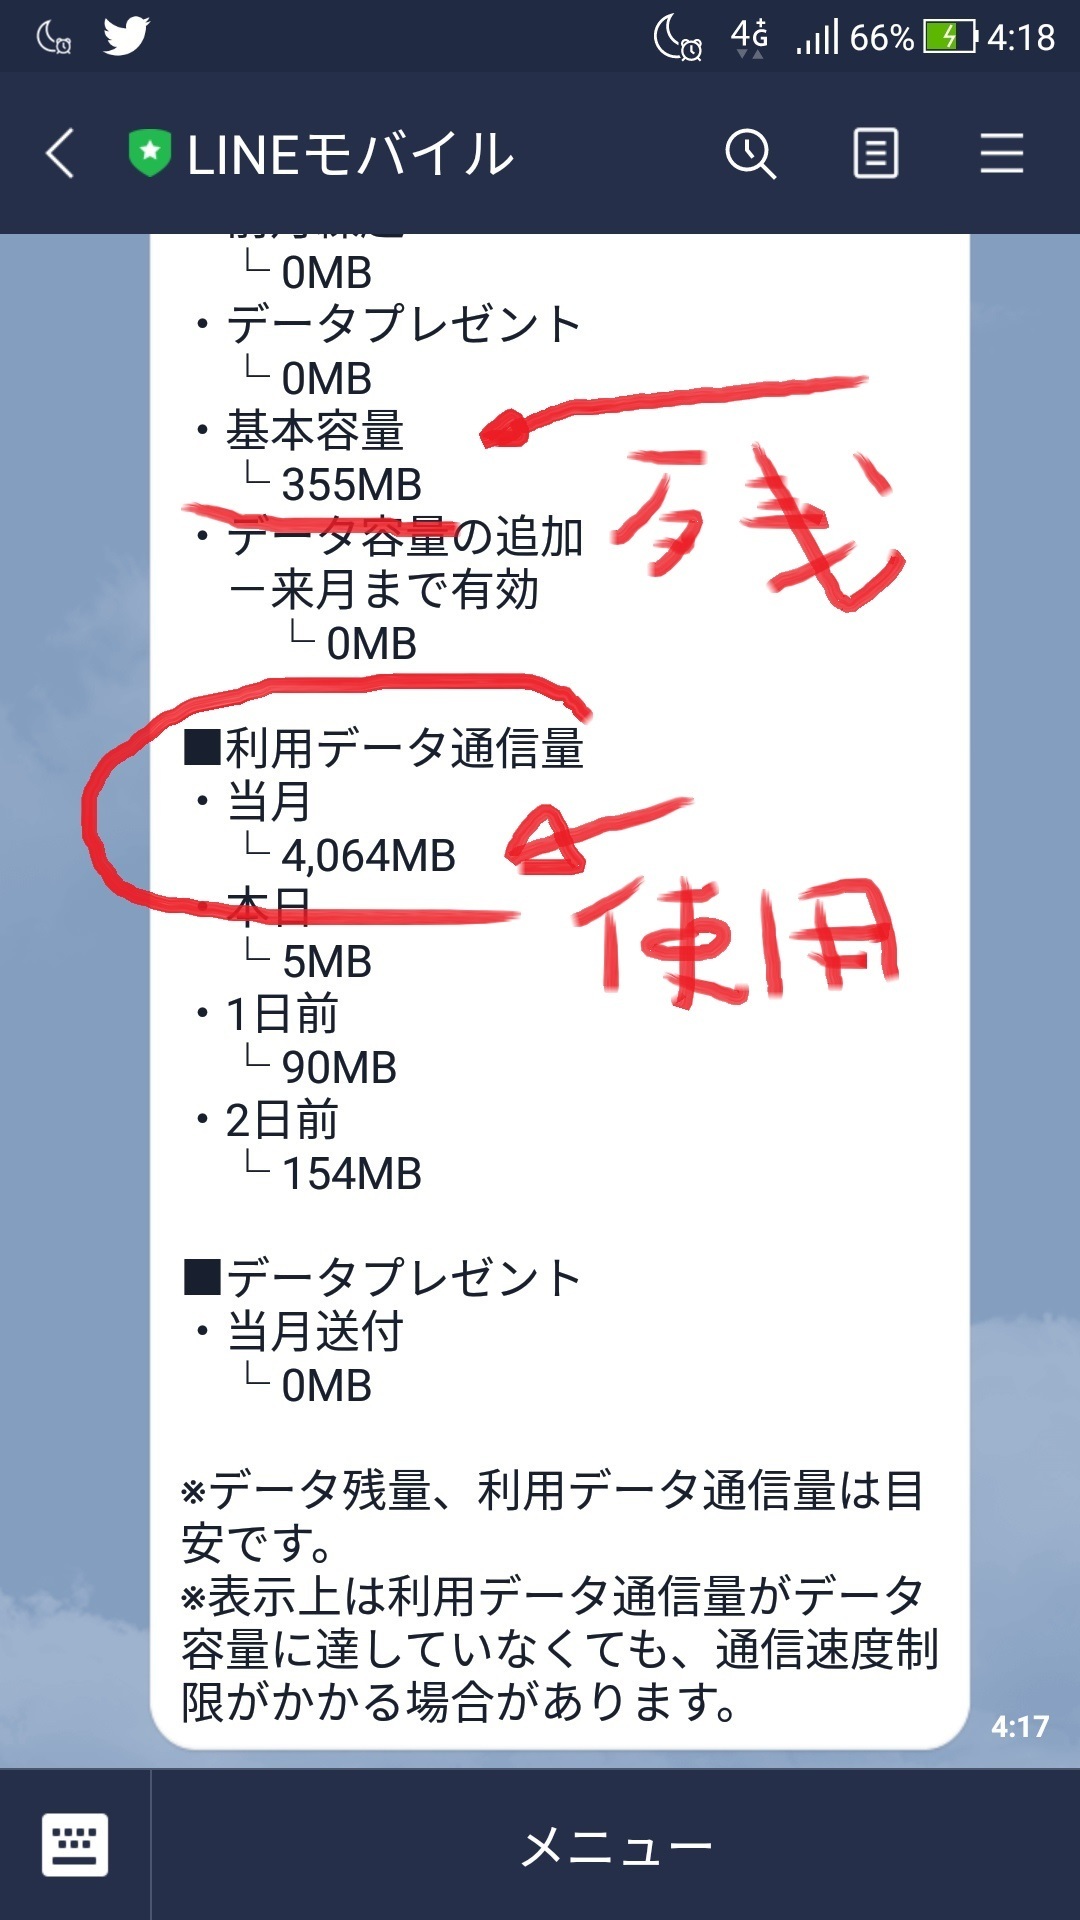 sumaho_LINE_mobile_app_kakuyasu_0428_1.jpg